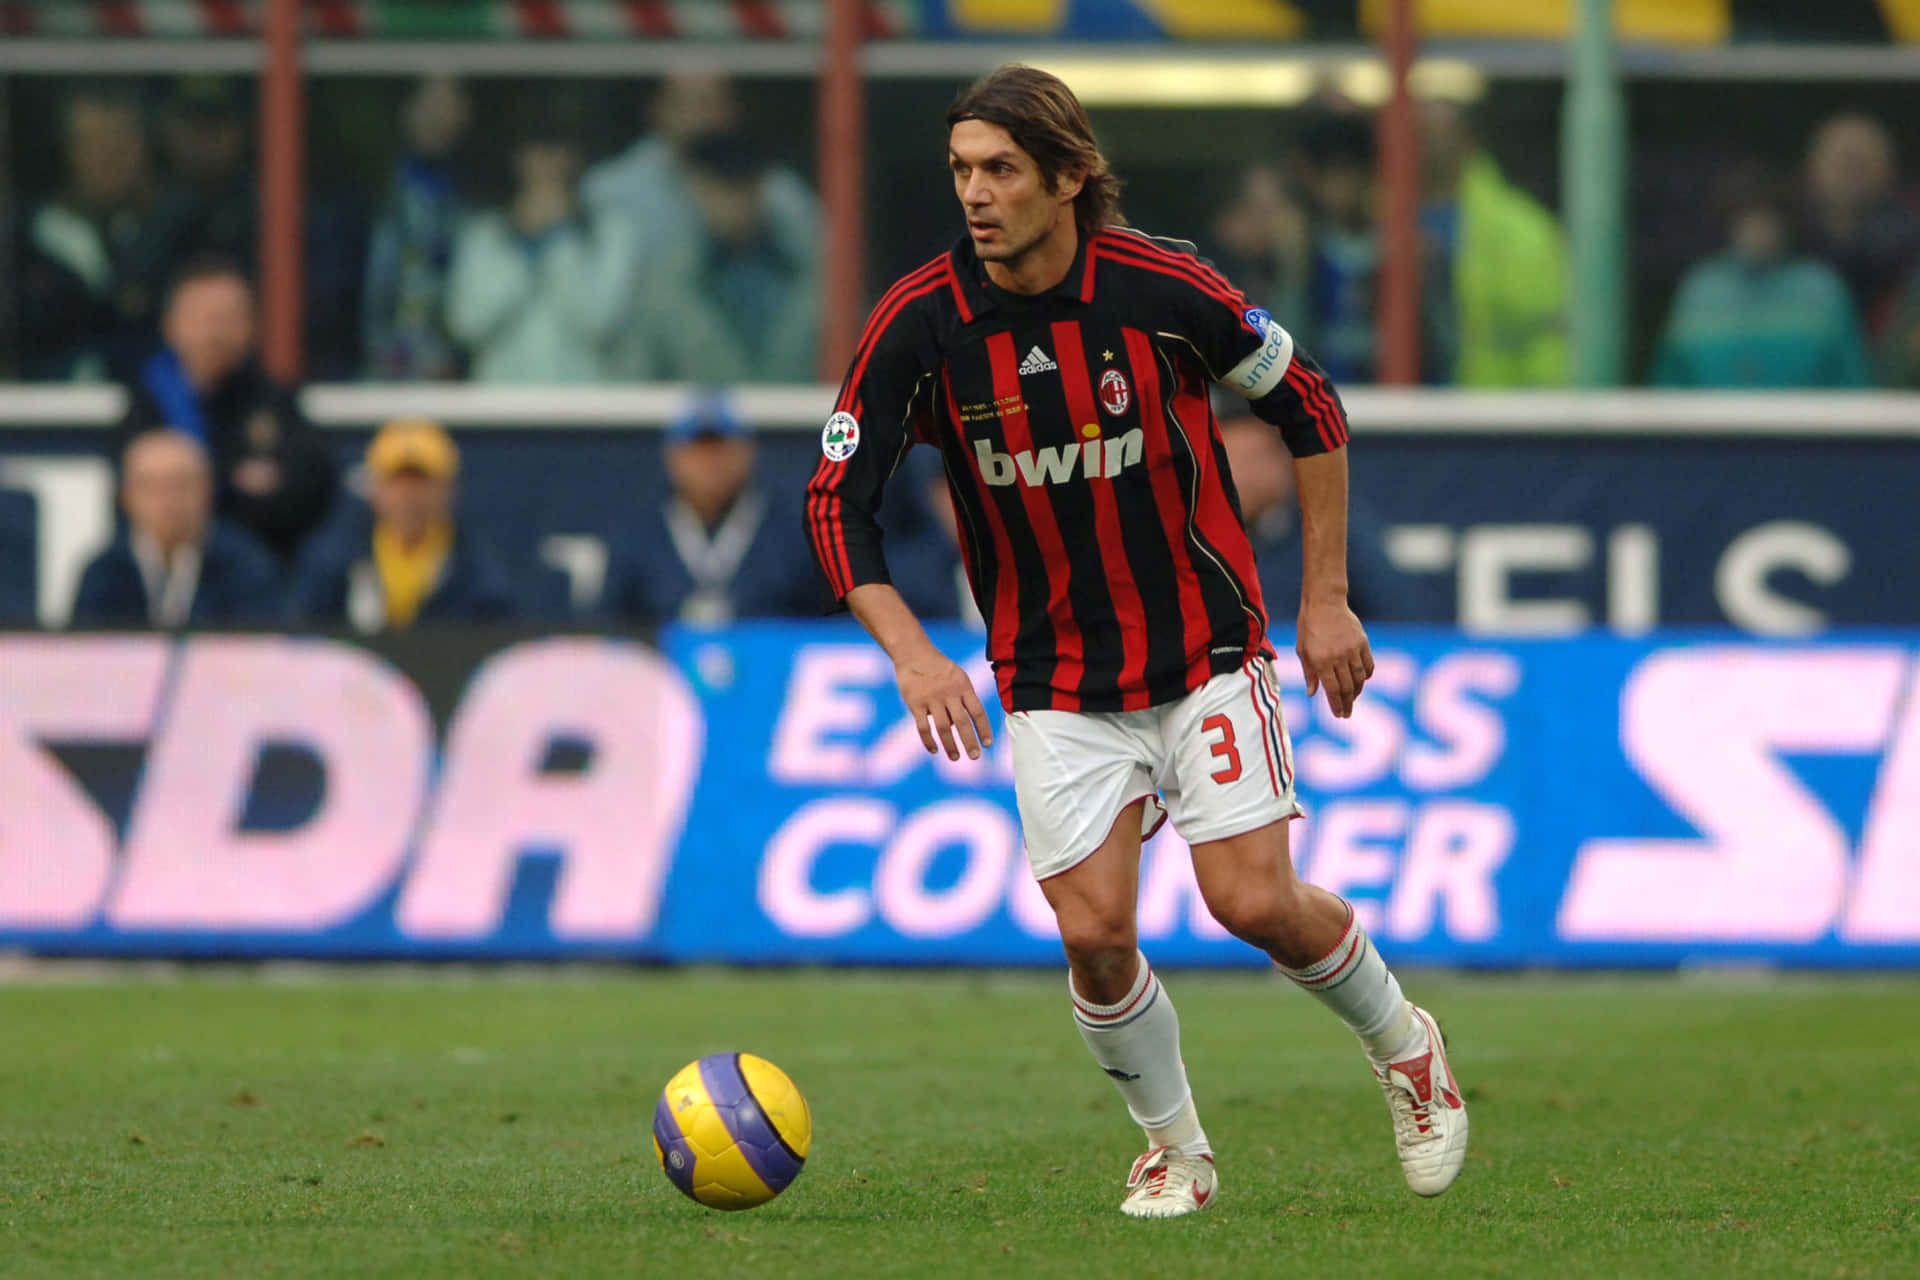 Paolo Maldini Kicking The Ball Background